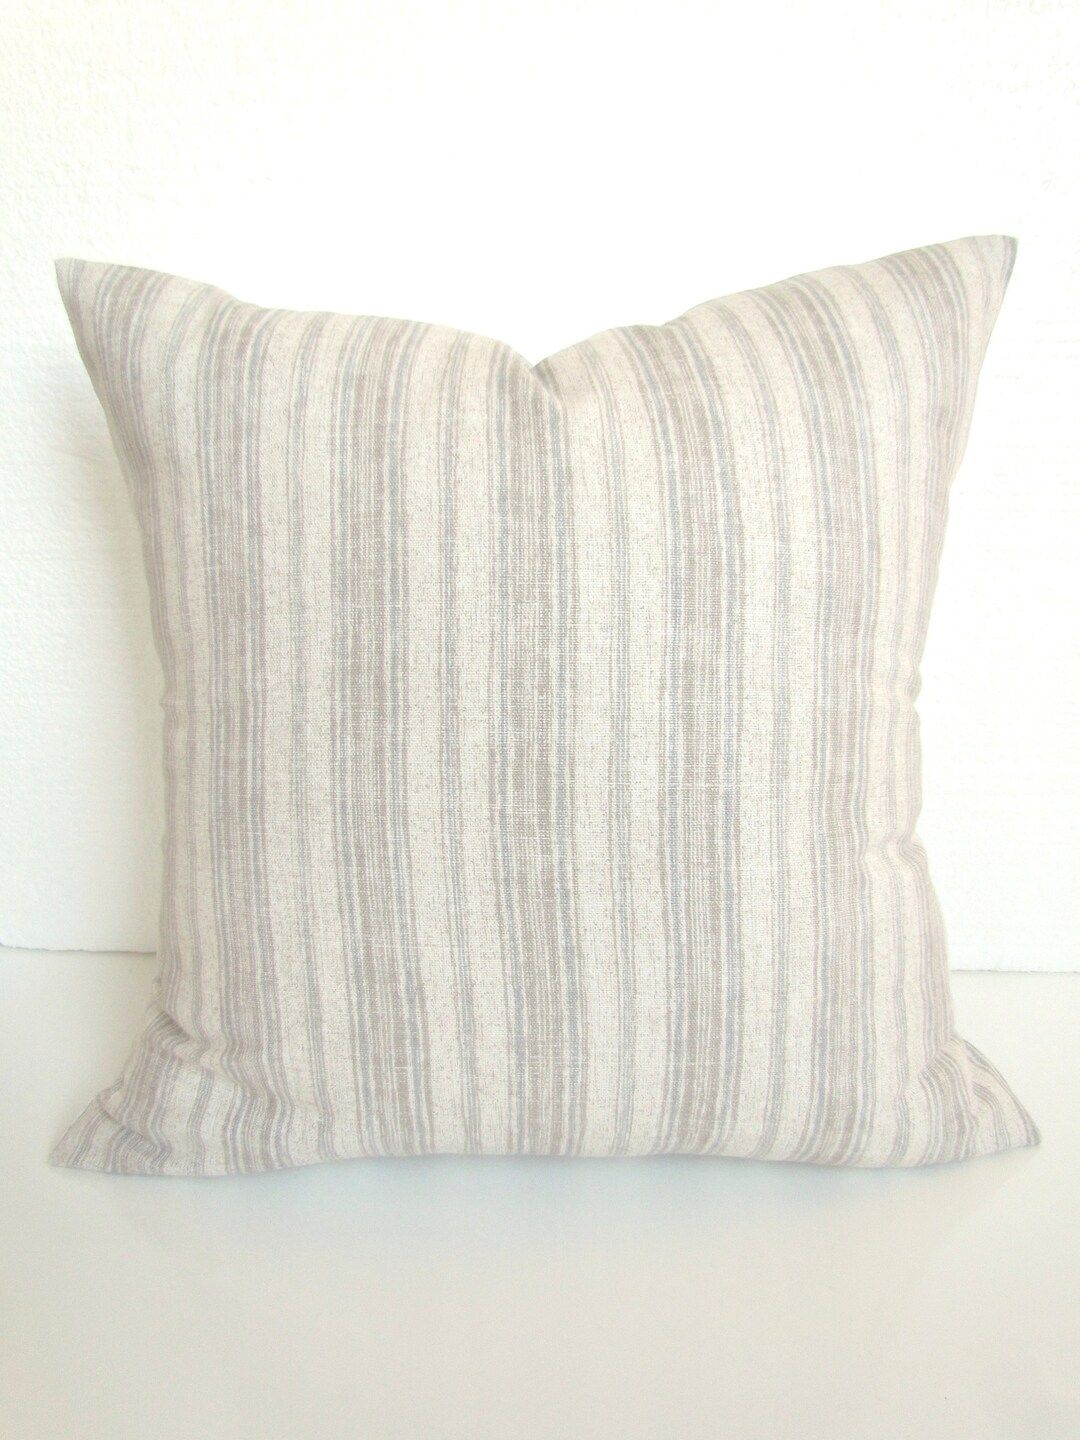 GRAY PILLOWS GREY Throw Pillow Covers Tan Pillows Grey Striped Decorative Pillow Covers Tan & Gre... | Etsy (US)